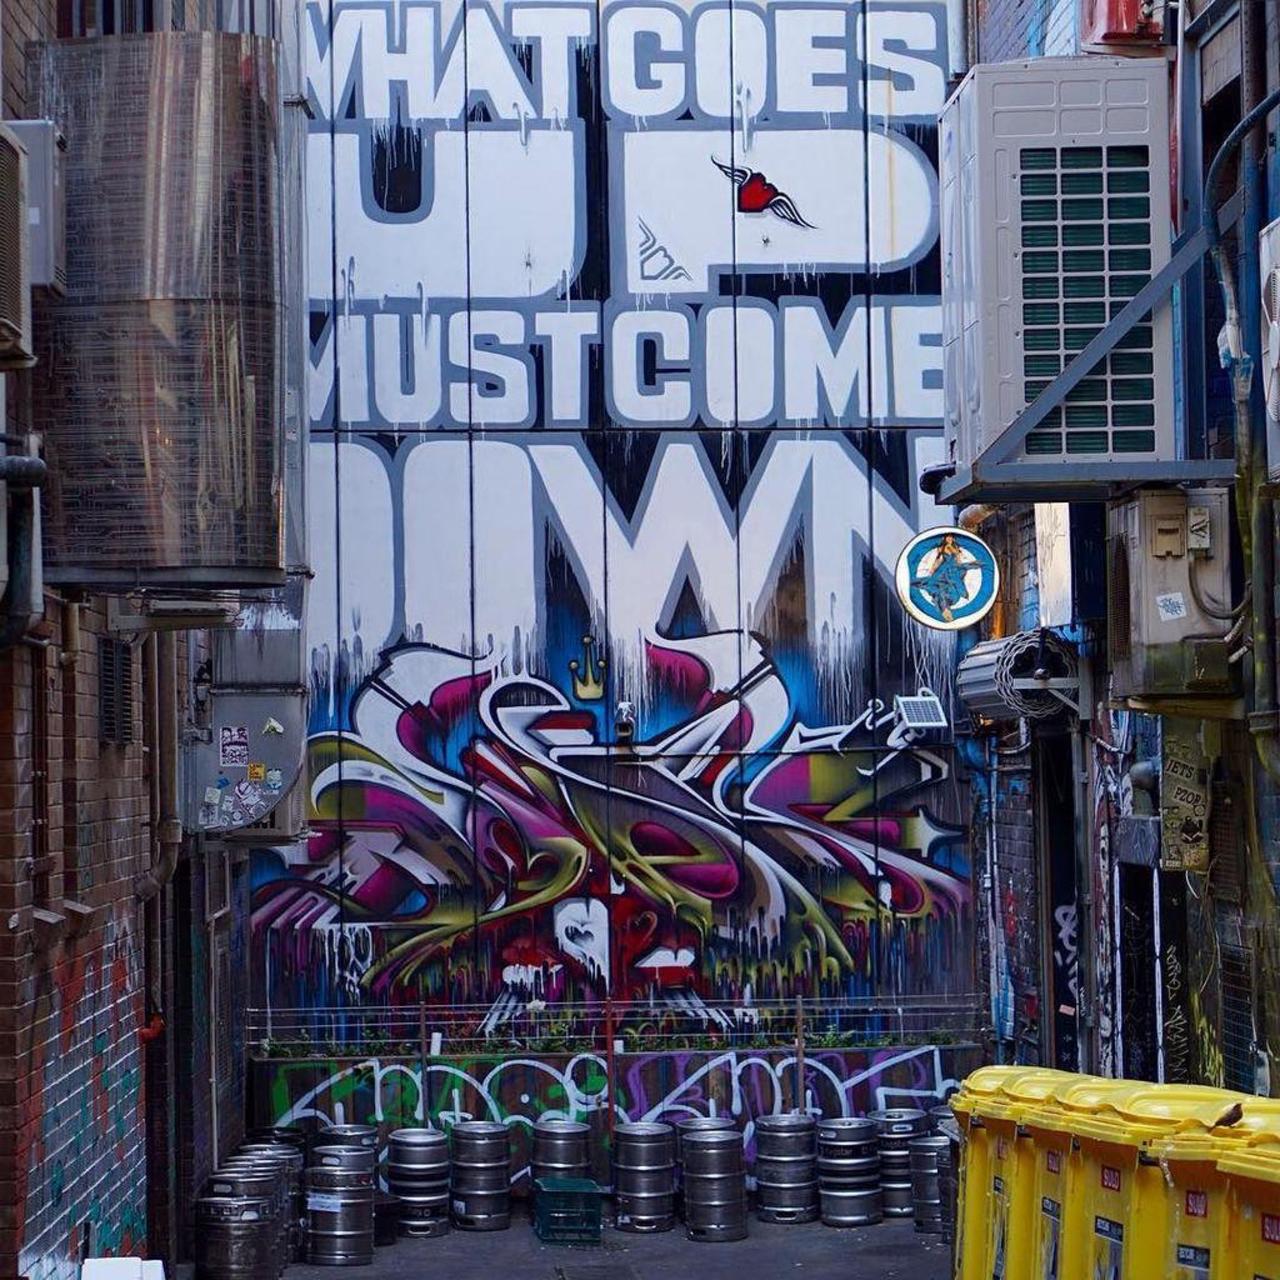 RT @StArtEverywhere: #whatgoesupmustcomedown #sisterbella #melbourne #laneway #streetart #streetartmelbourne #graffiti #urban #city #keg… http://t.co/3Vs4QfhNgq